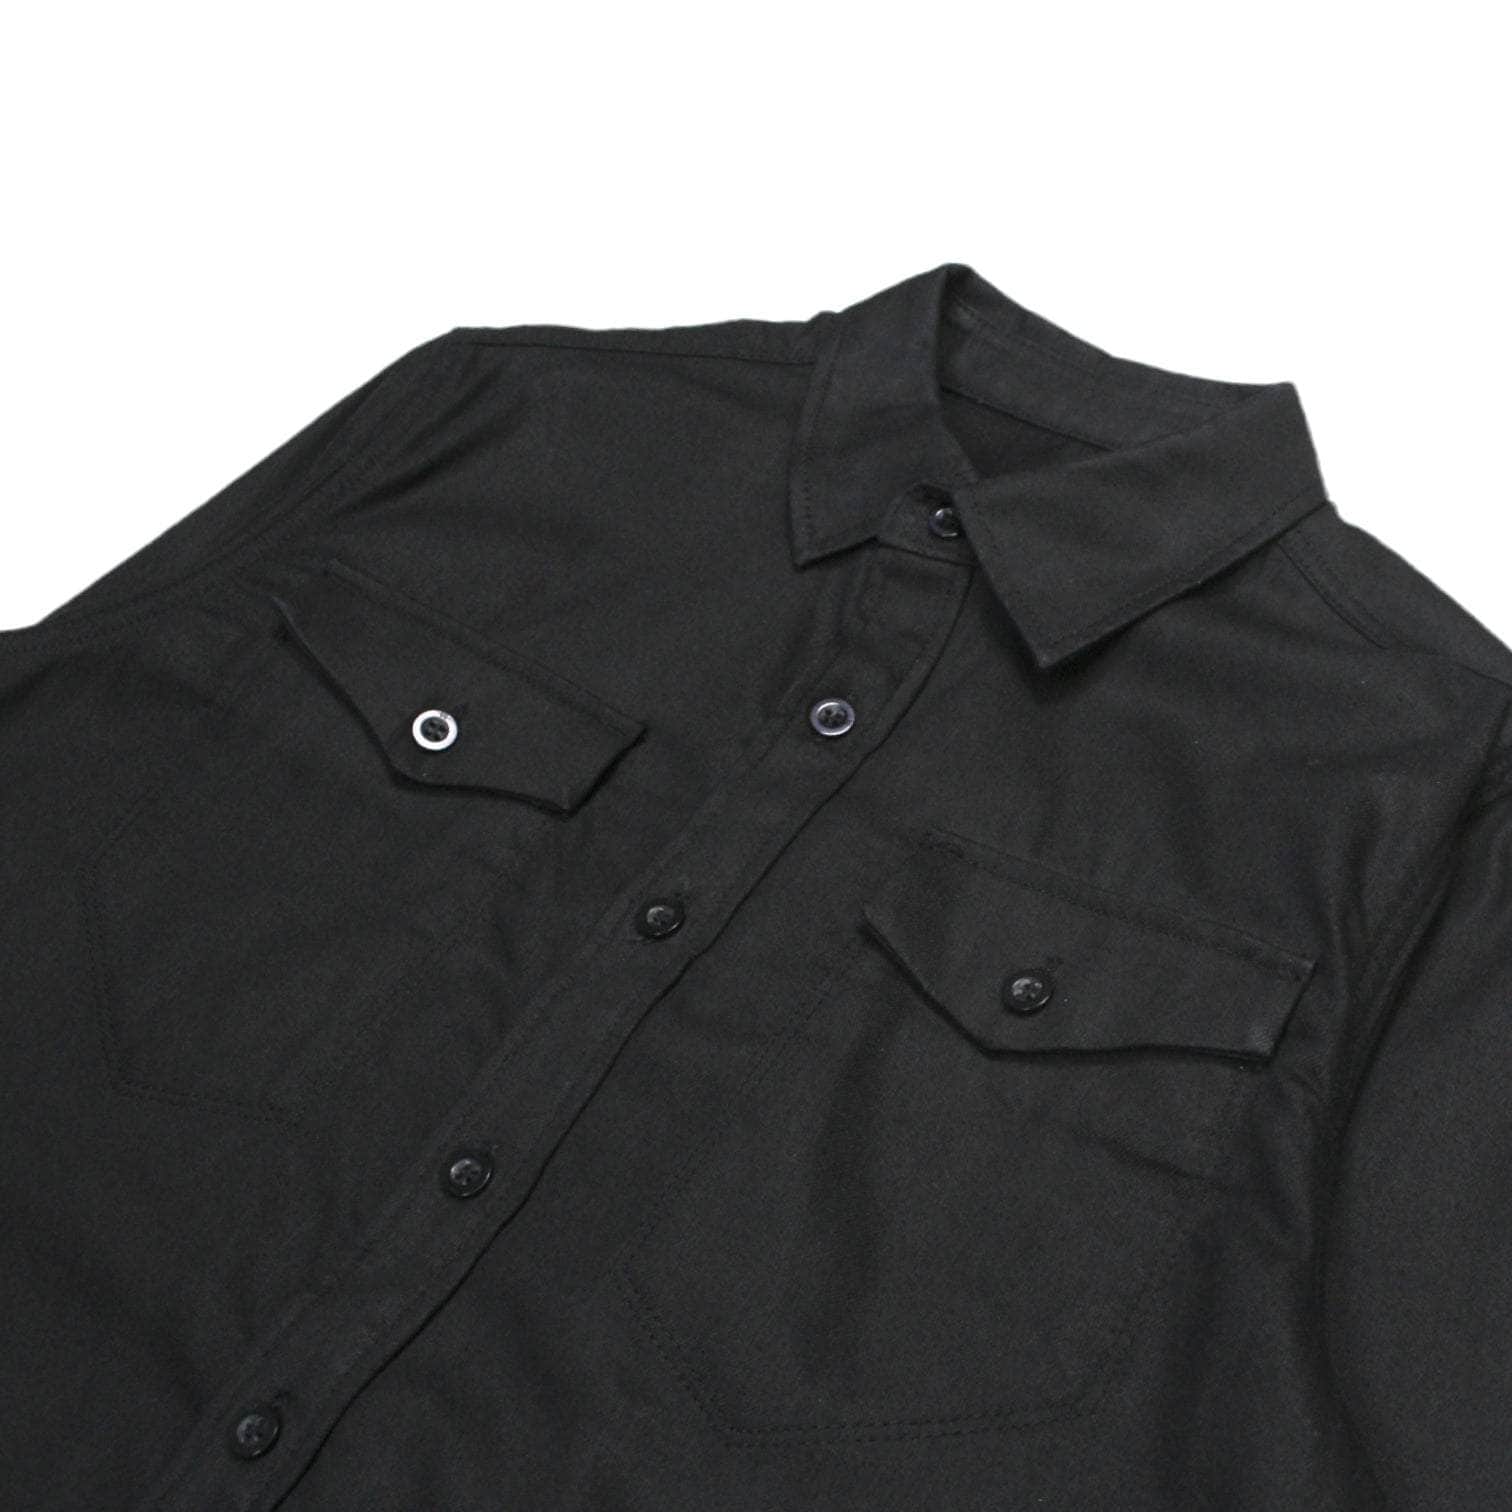 G-Star Raw Black Denim Shirt Dress